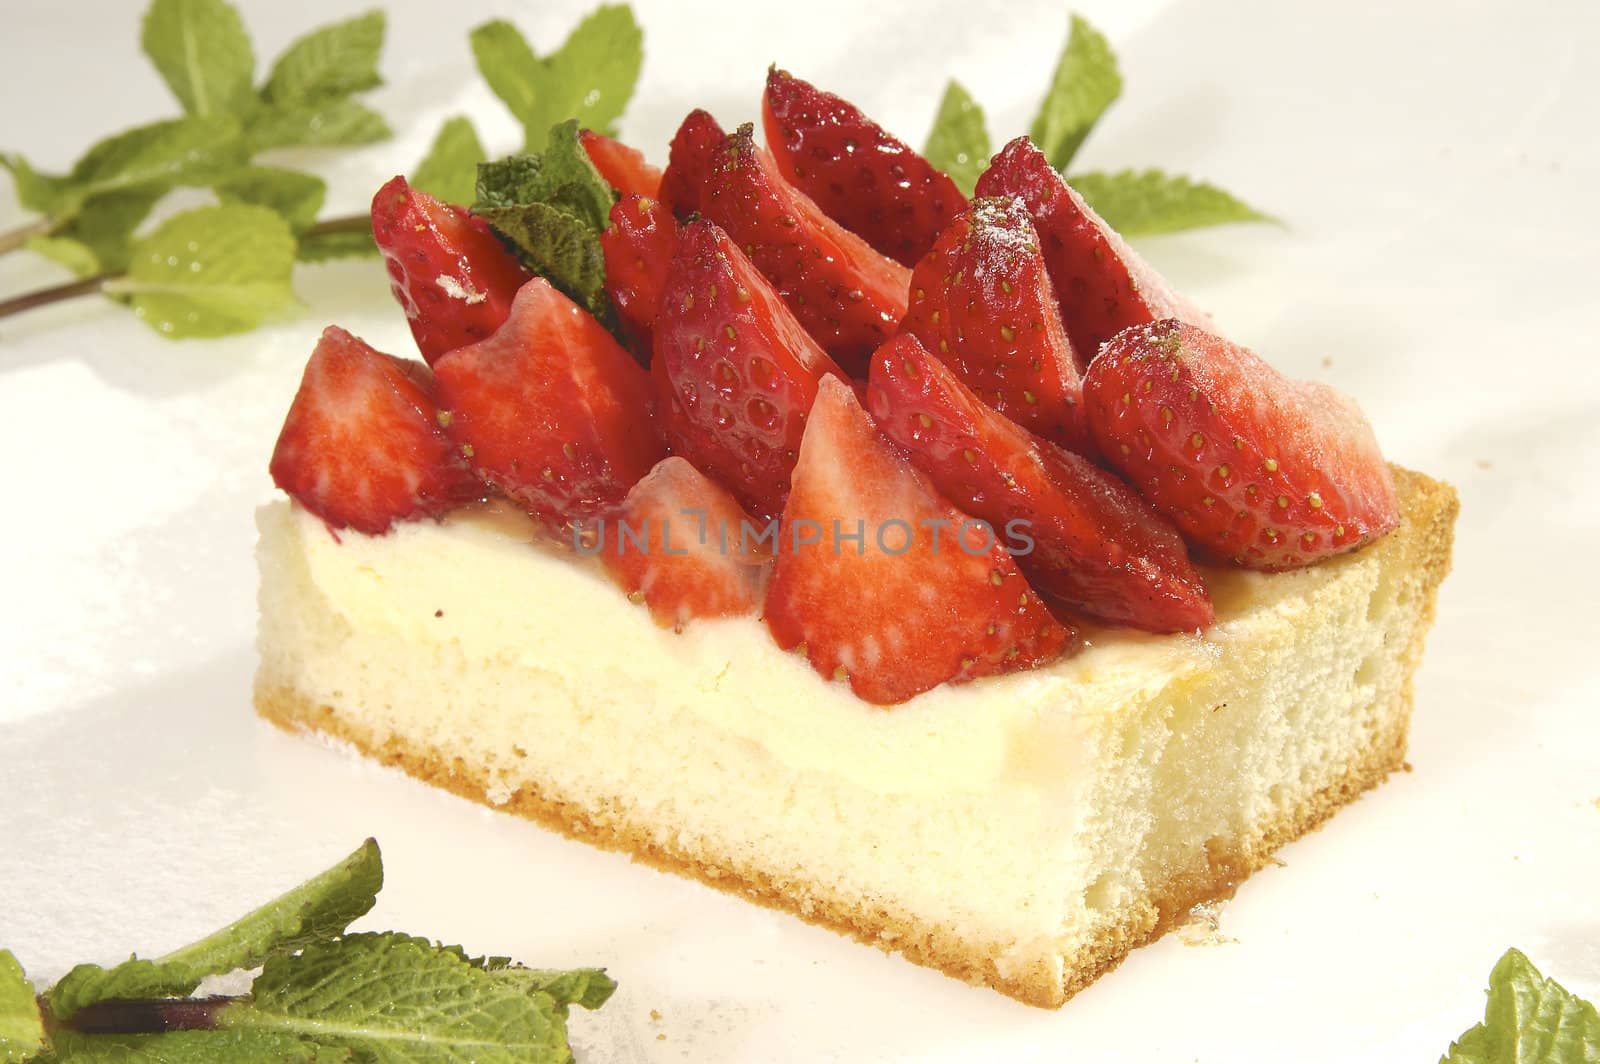 Strawberry cake by hanusst